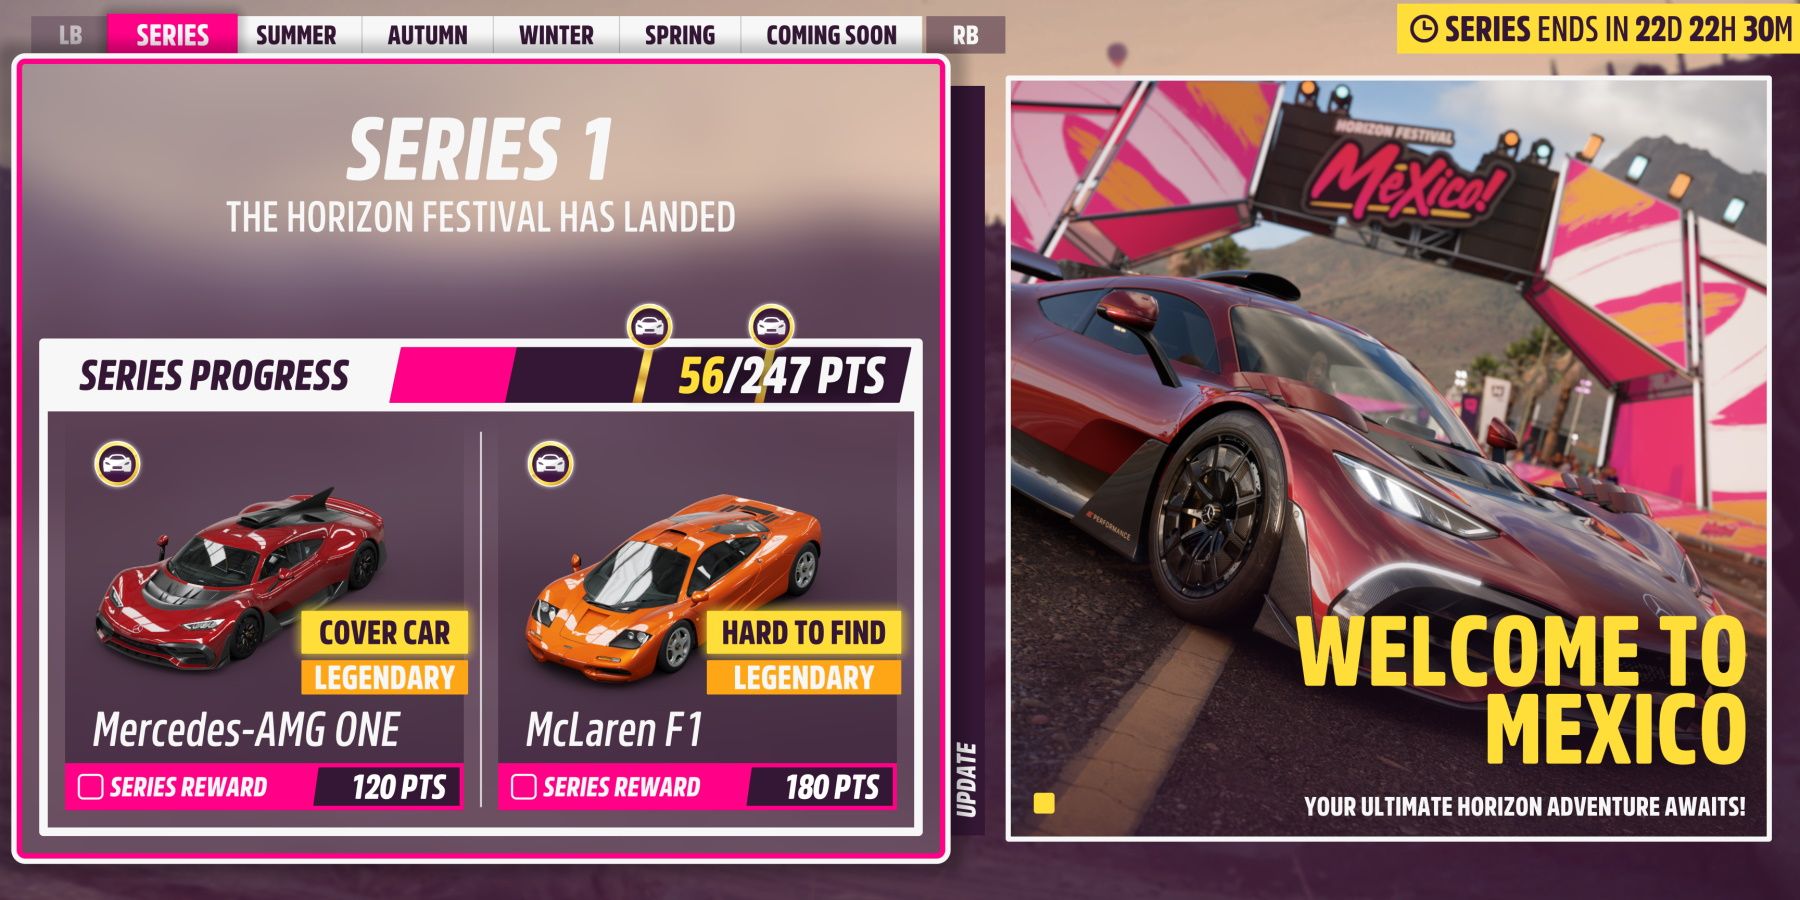 Forza Horizon 5 Welcome to Mexico rewards cover car and mclaren f1